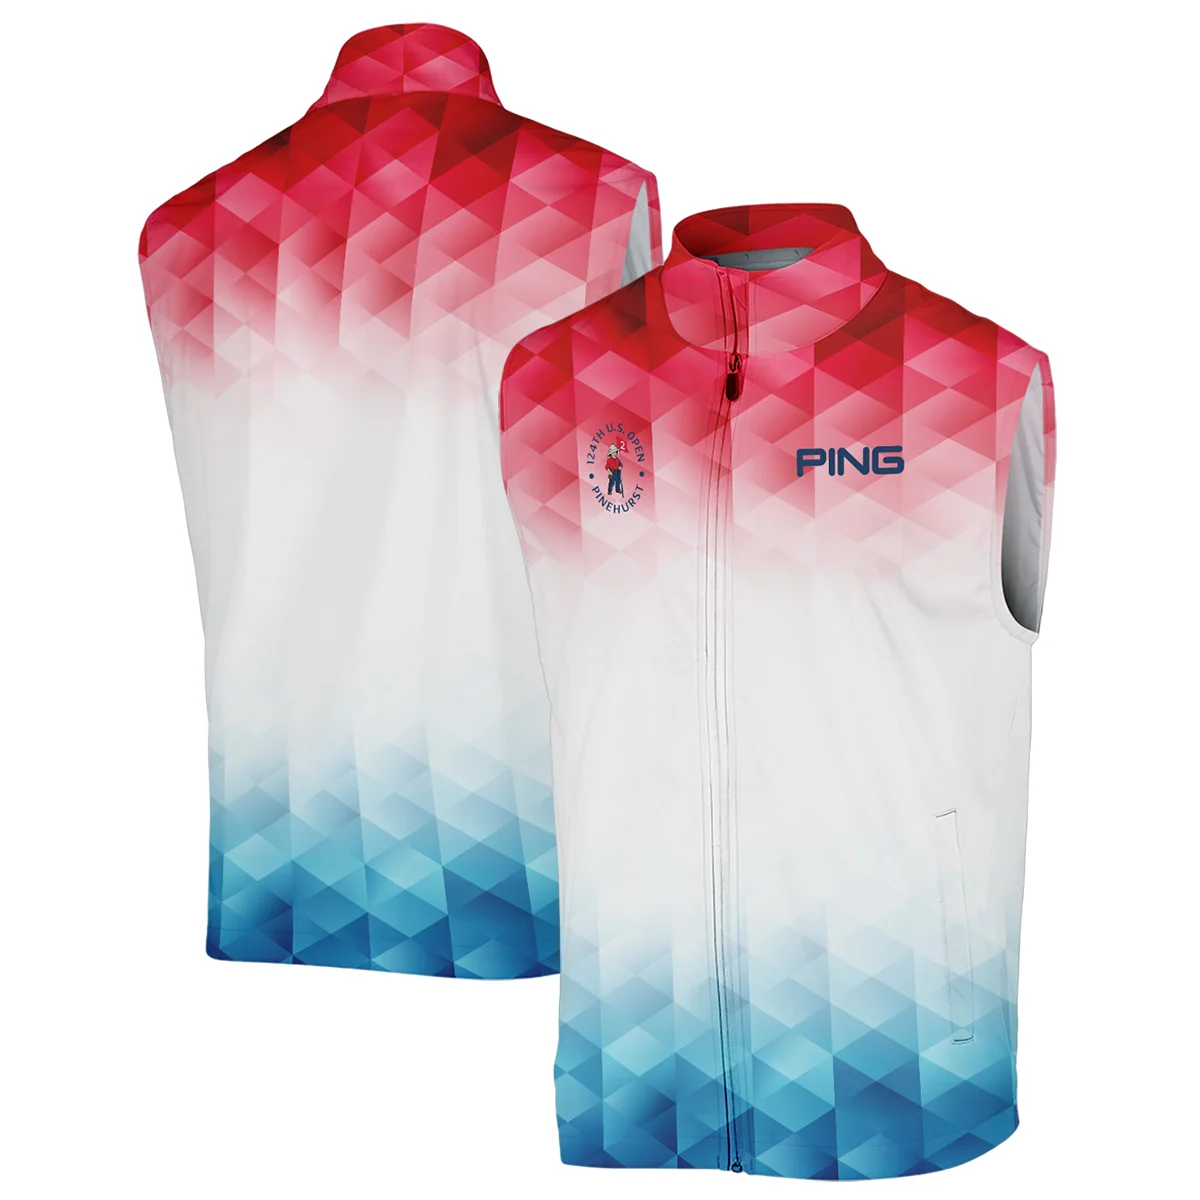 124th U.S. Open Pinehurst Ping Golf Sport Sleeveless Jacket Blue Red Abstract Geometric Triangles All Over Print Sleeveless Jacket